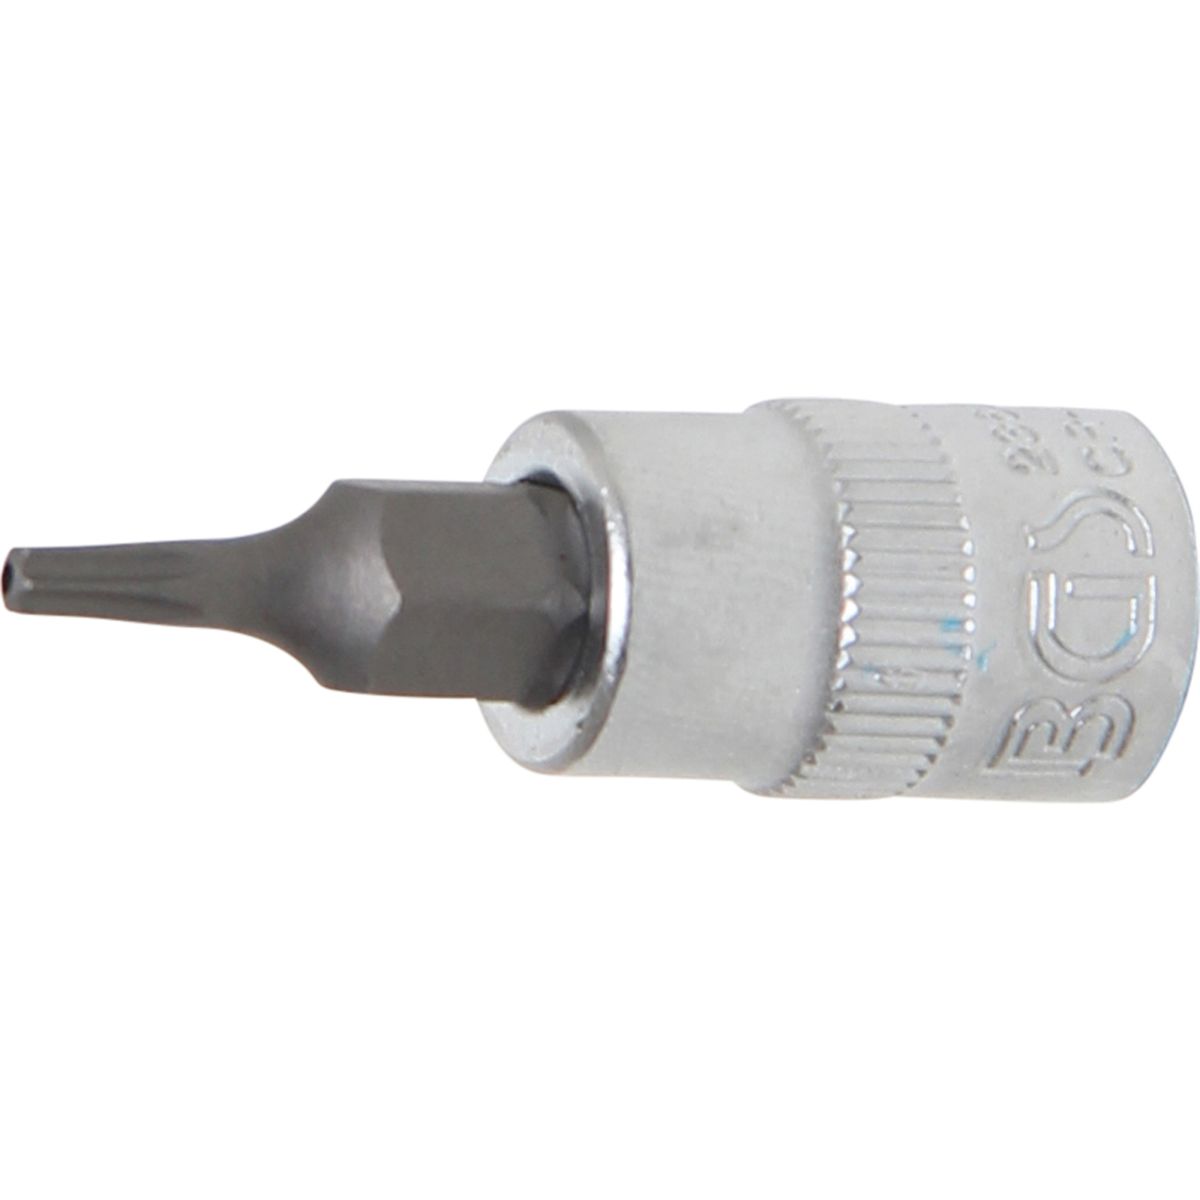 Bit Socket | 6.3 mm (1/4") Drive | T-Star tamperproof (for Torx) T9